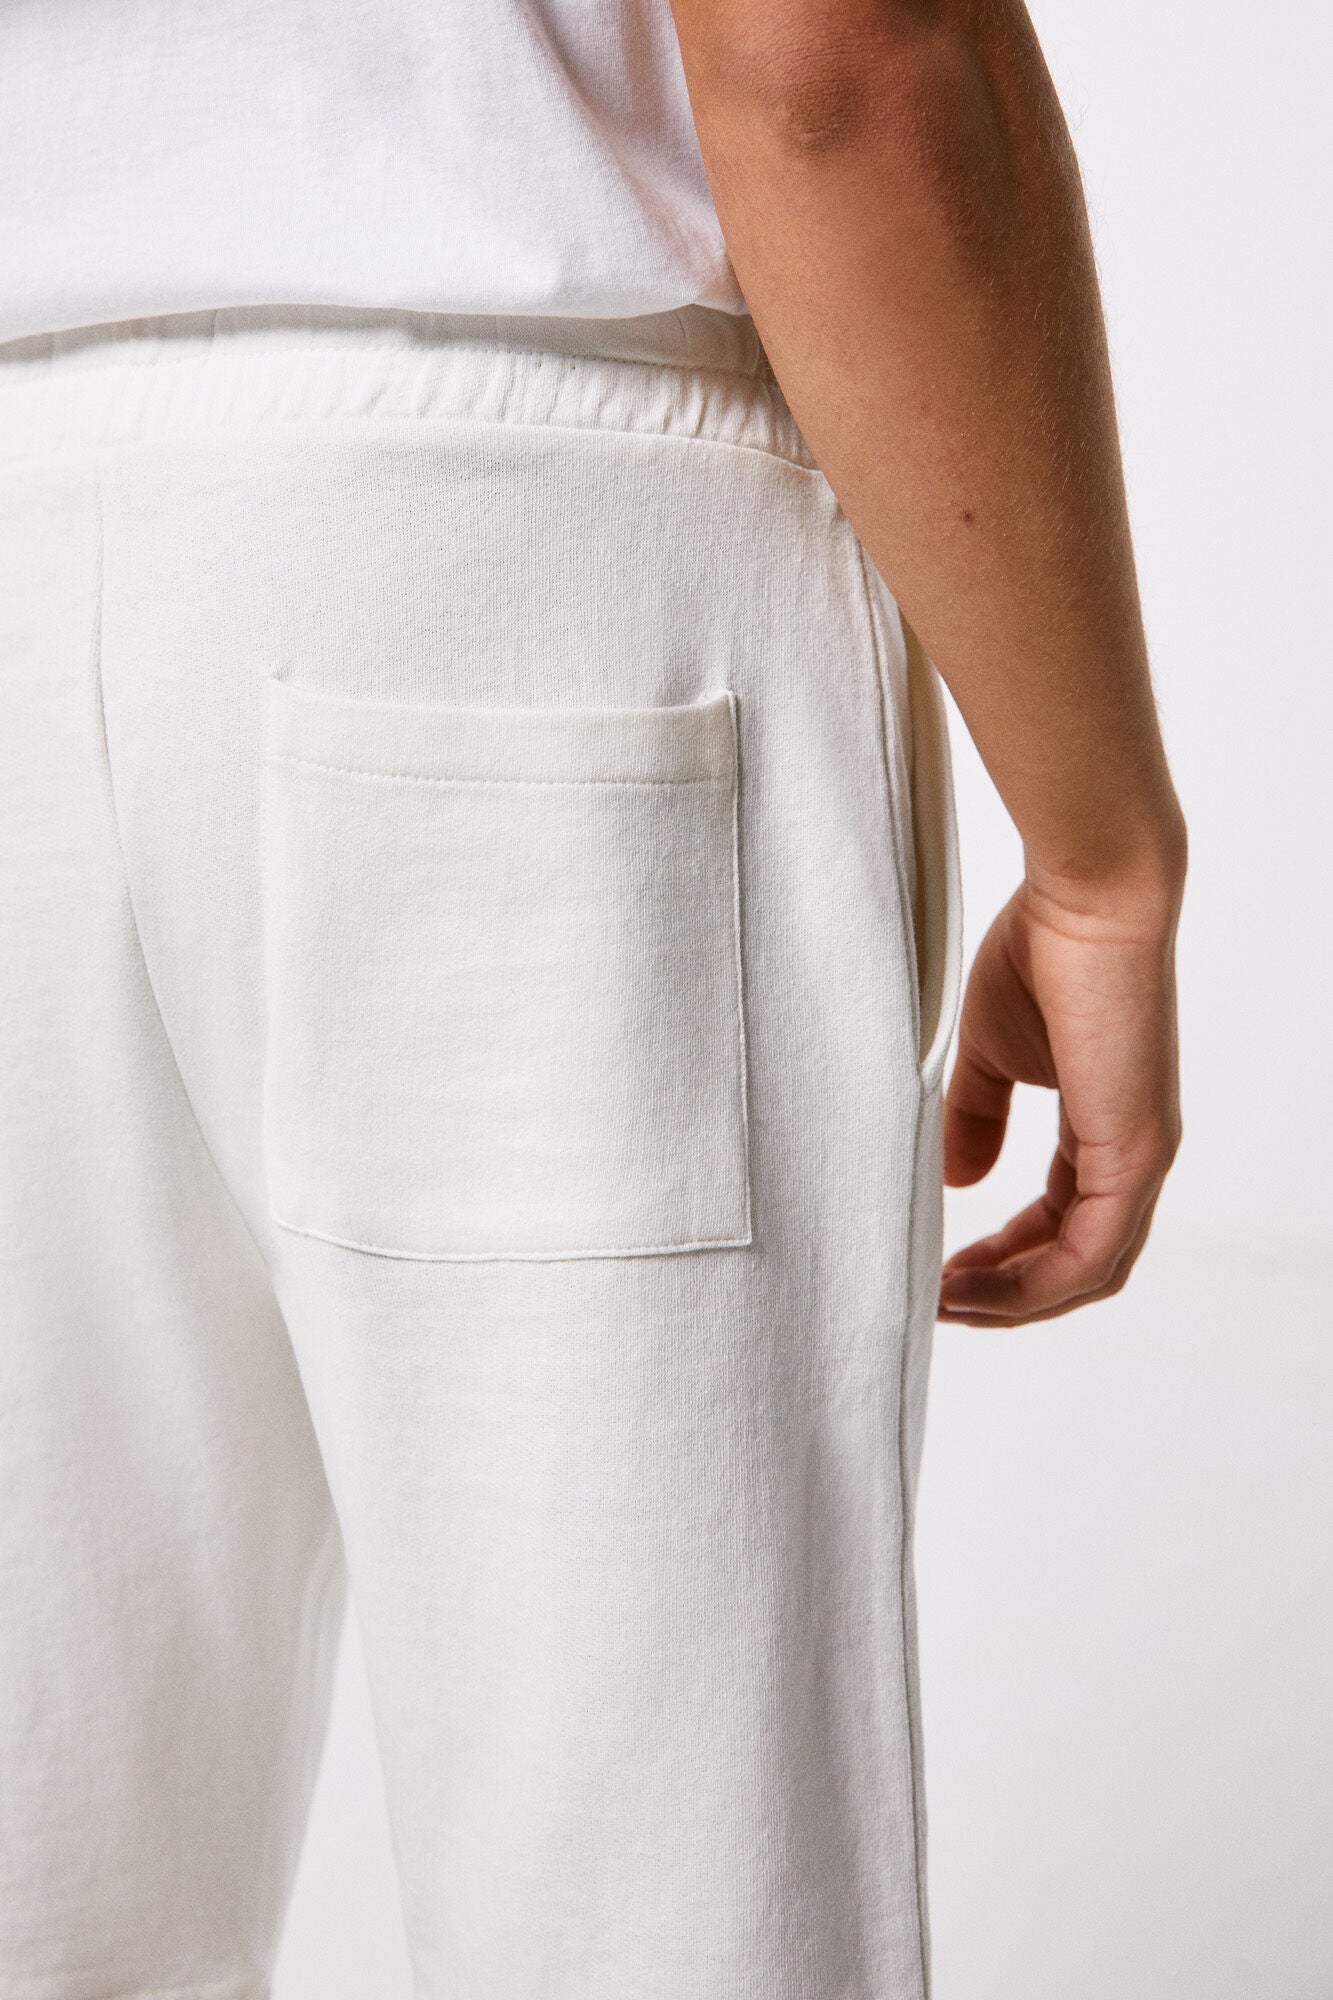 Jogger Bermuda shorts - White